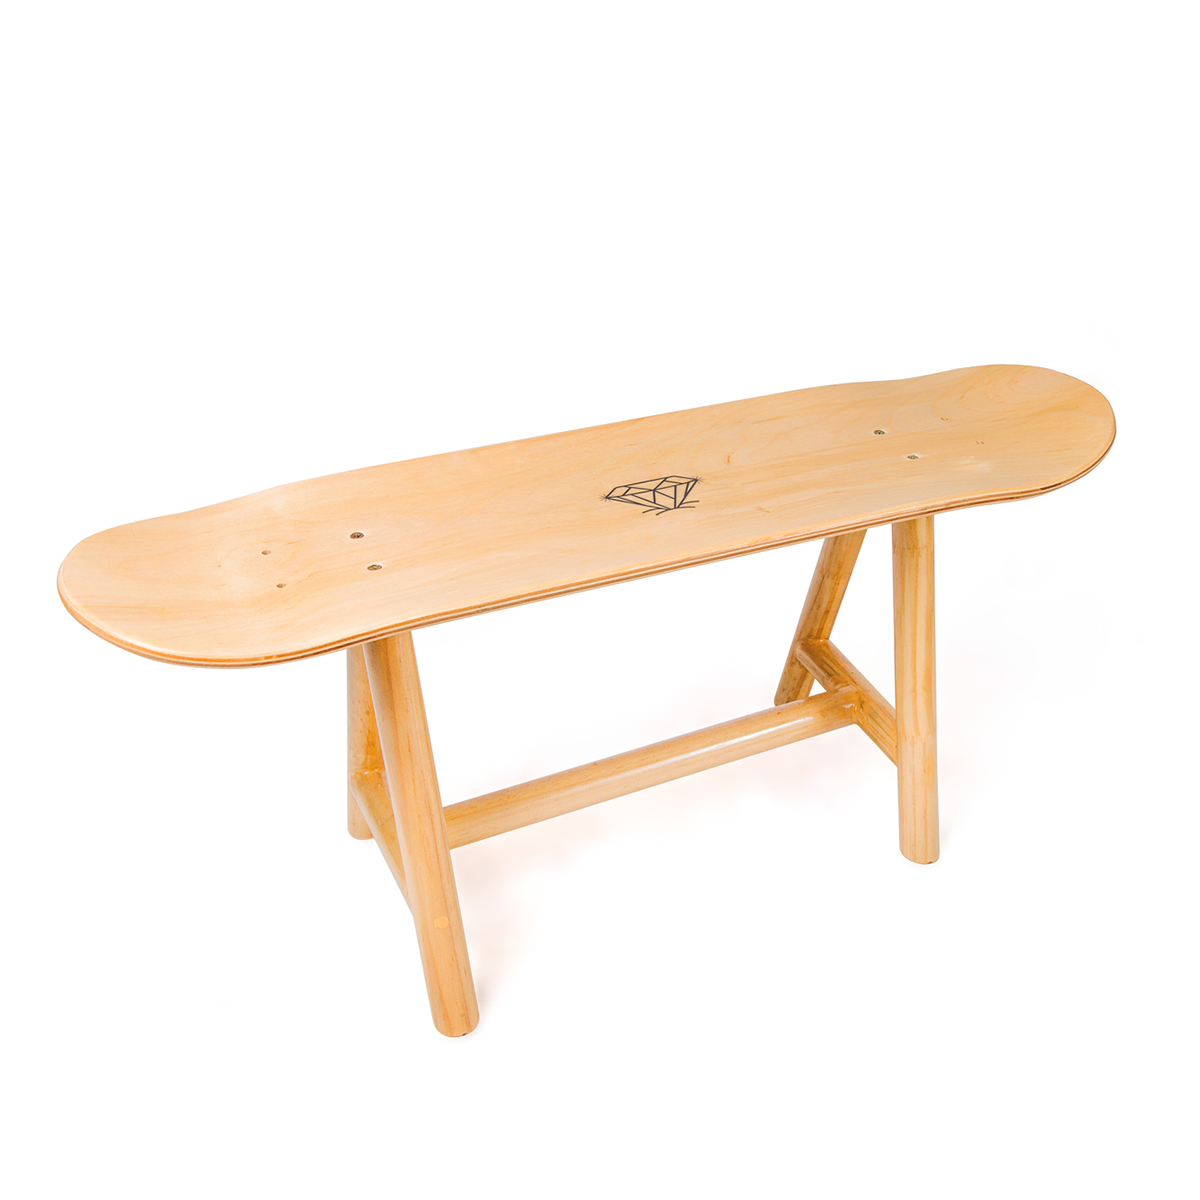 furniture campos boards chair skateboard skateboarding diamond  silla diego campos